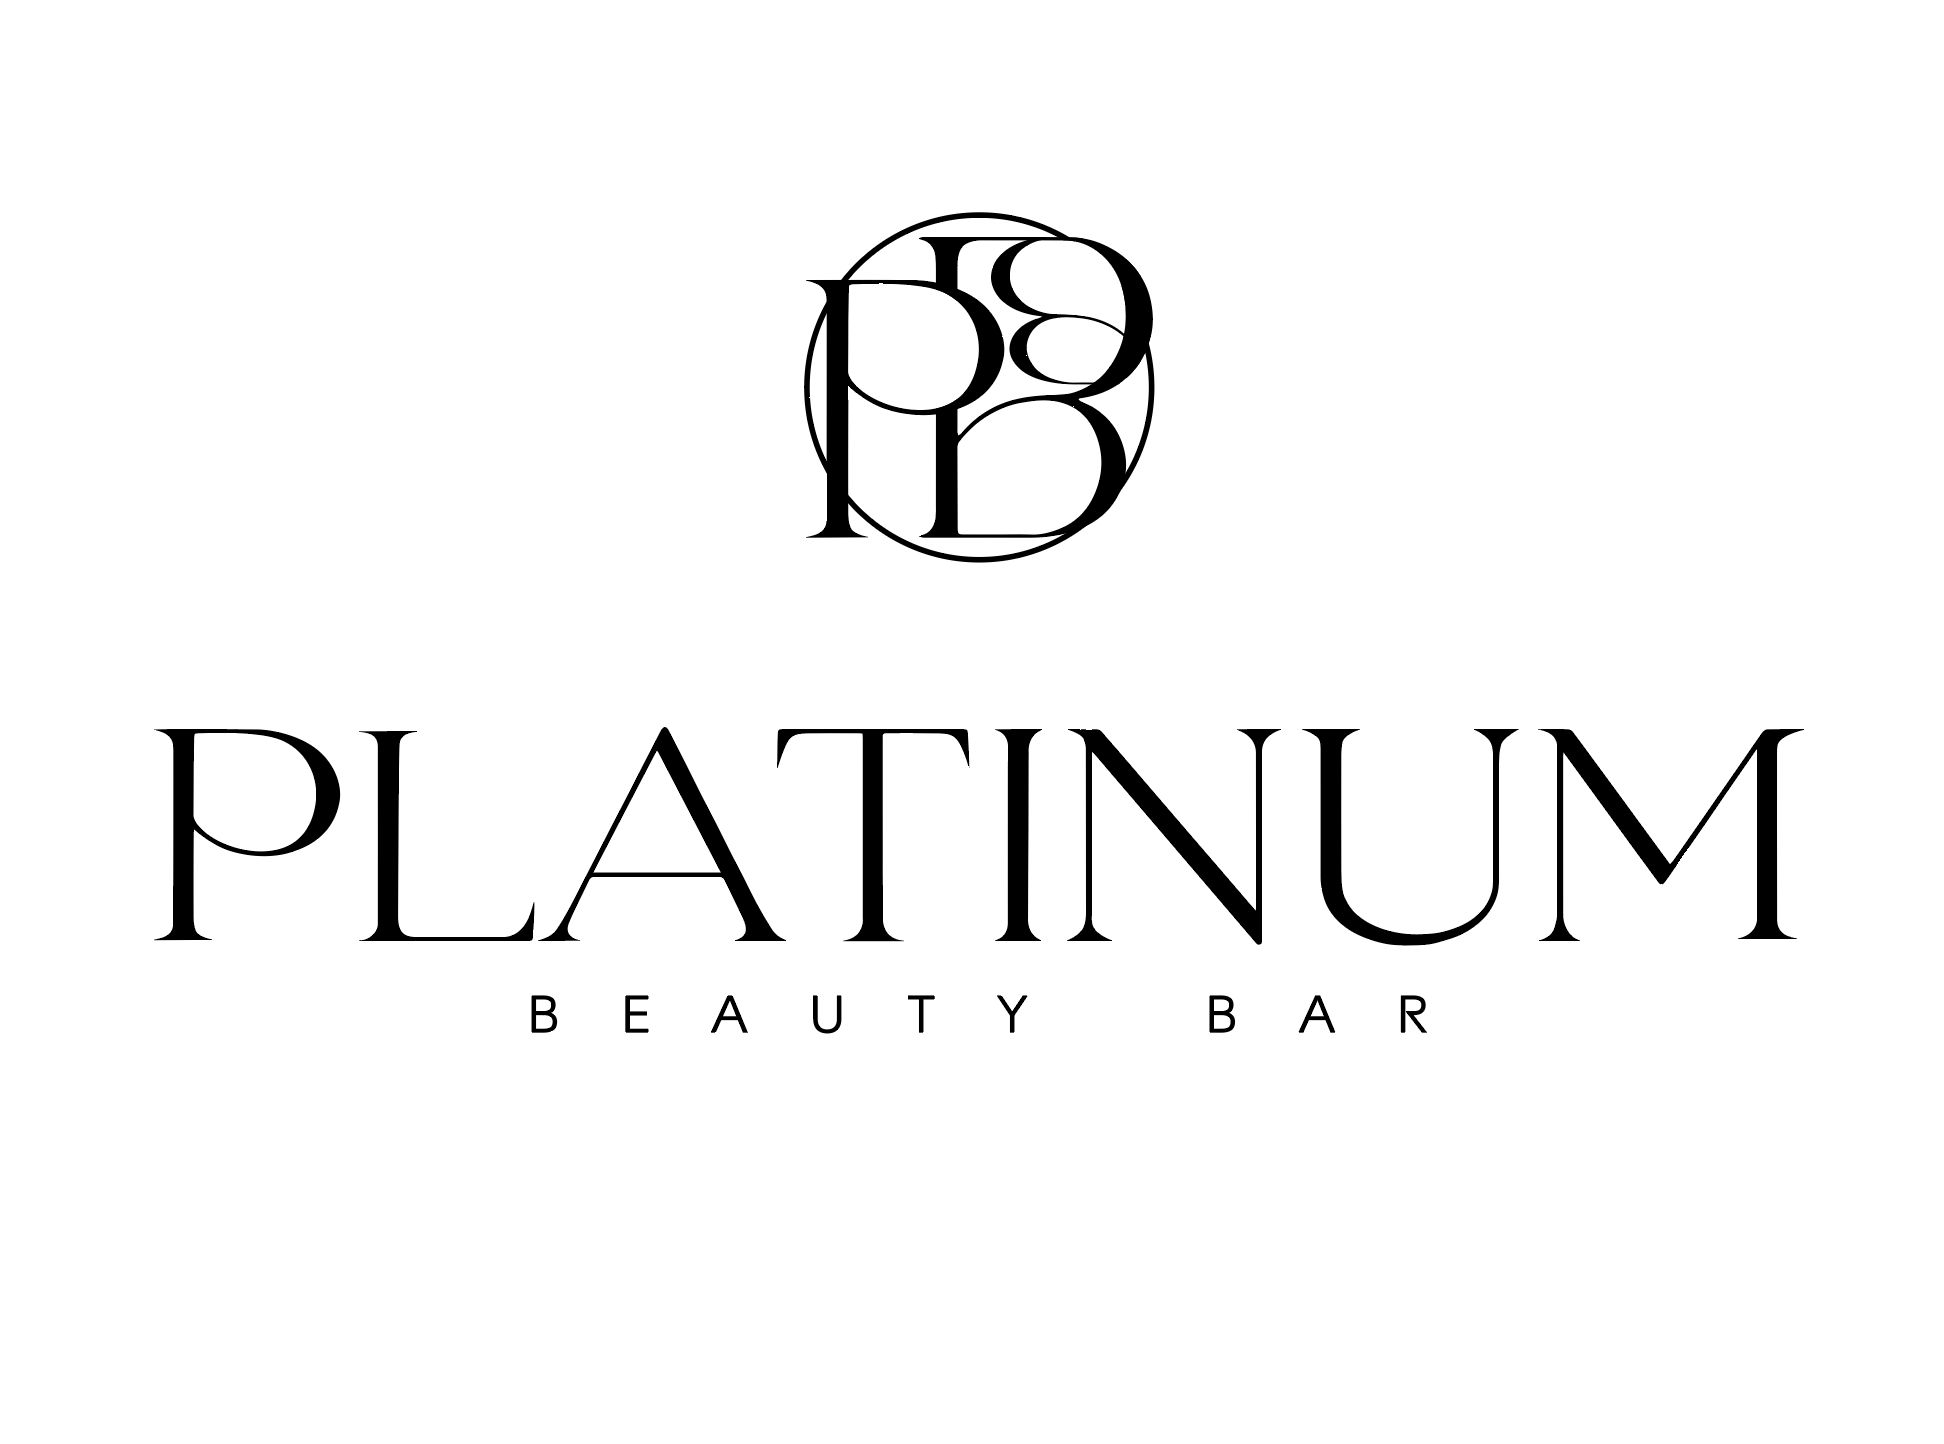 Custom Business Signage for Platinum Beauty Bar Name Sign - VividEditions